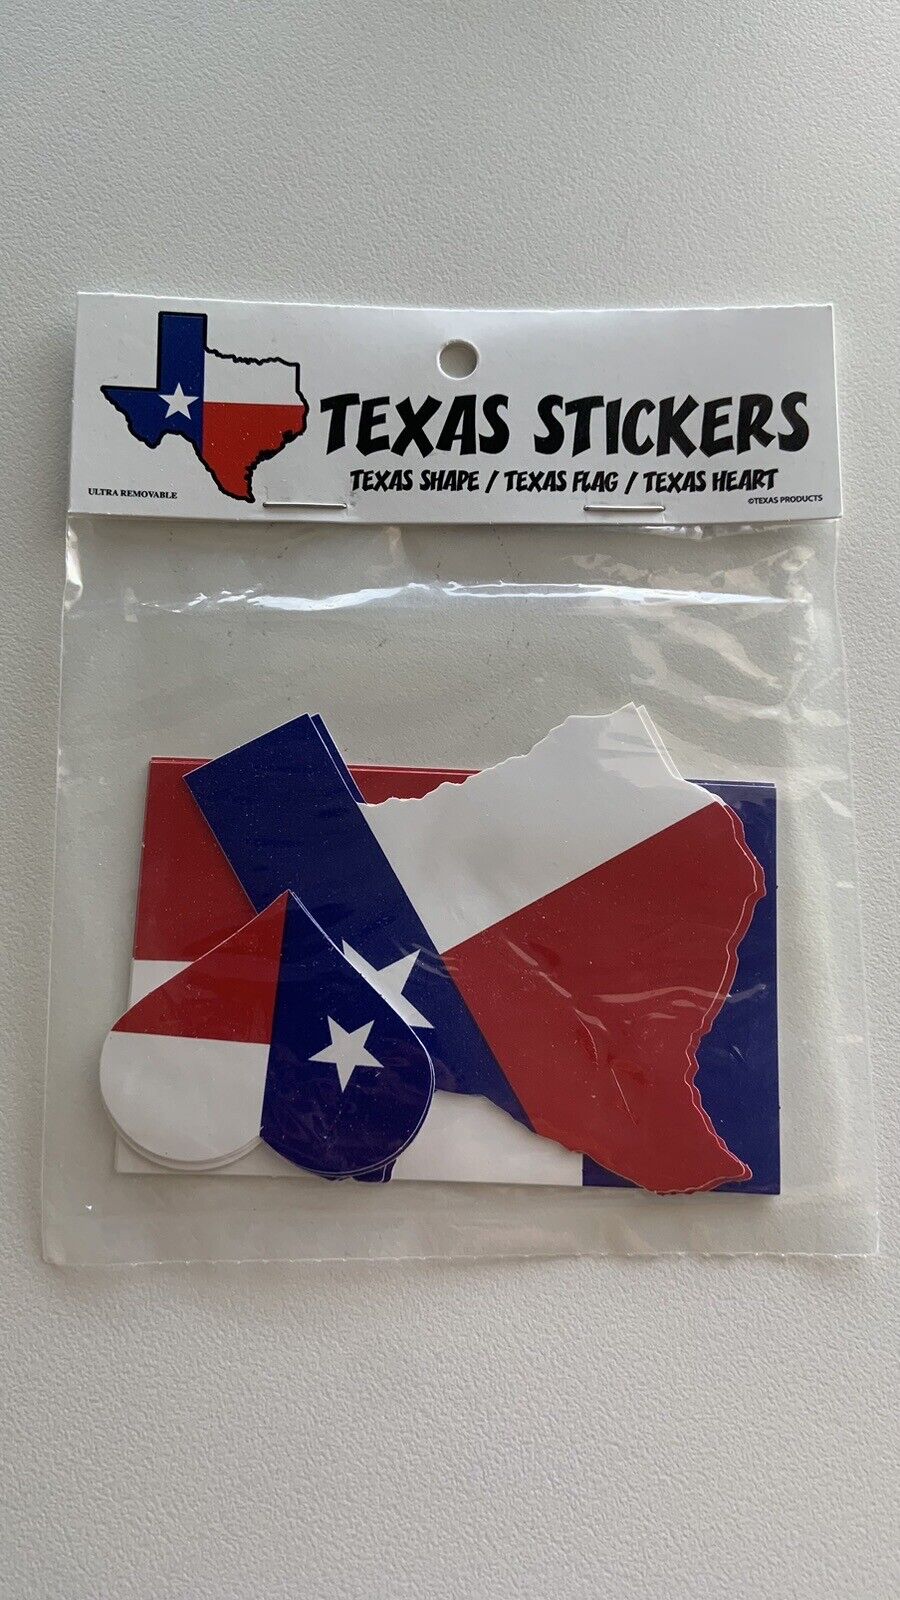 8 Texas Stickers, 2 Texas Hearts, 2 Texas Flags, 2 Texas Shapes